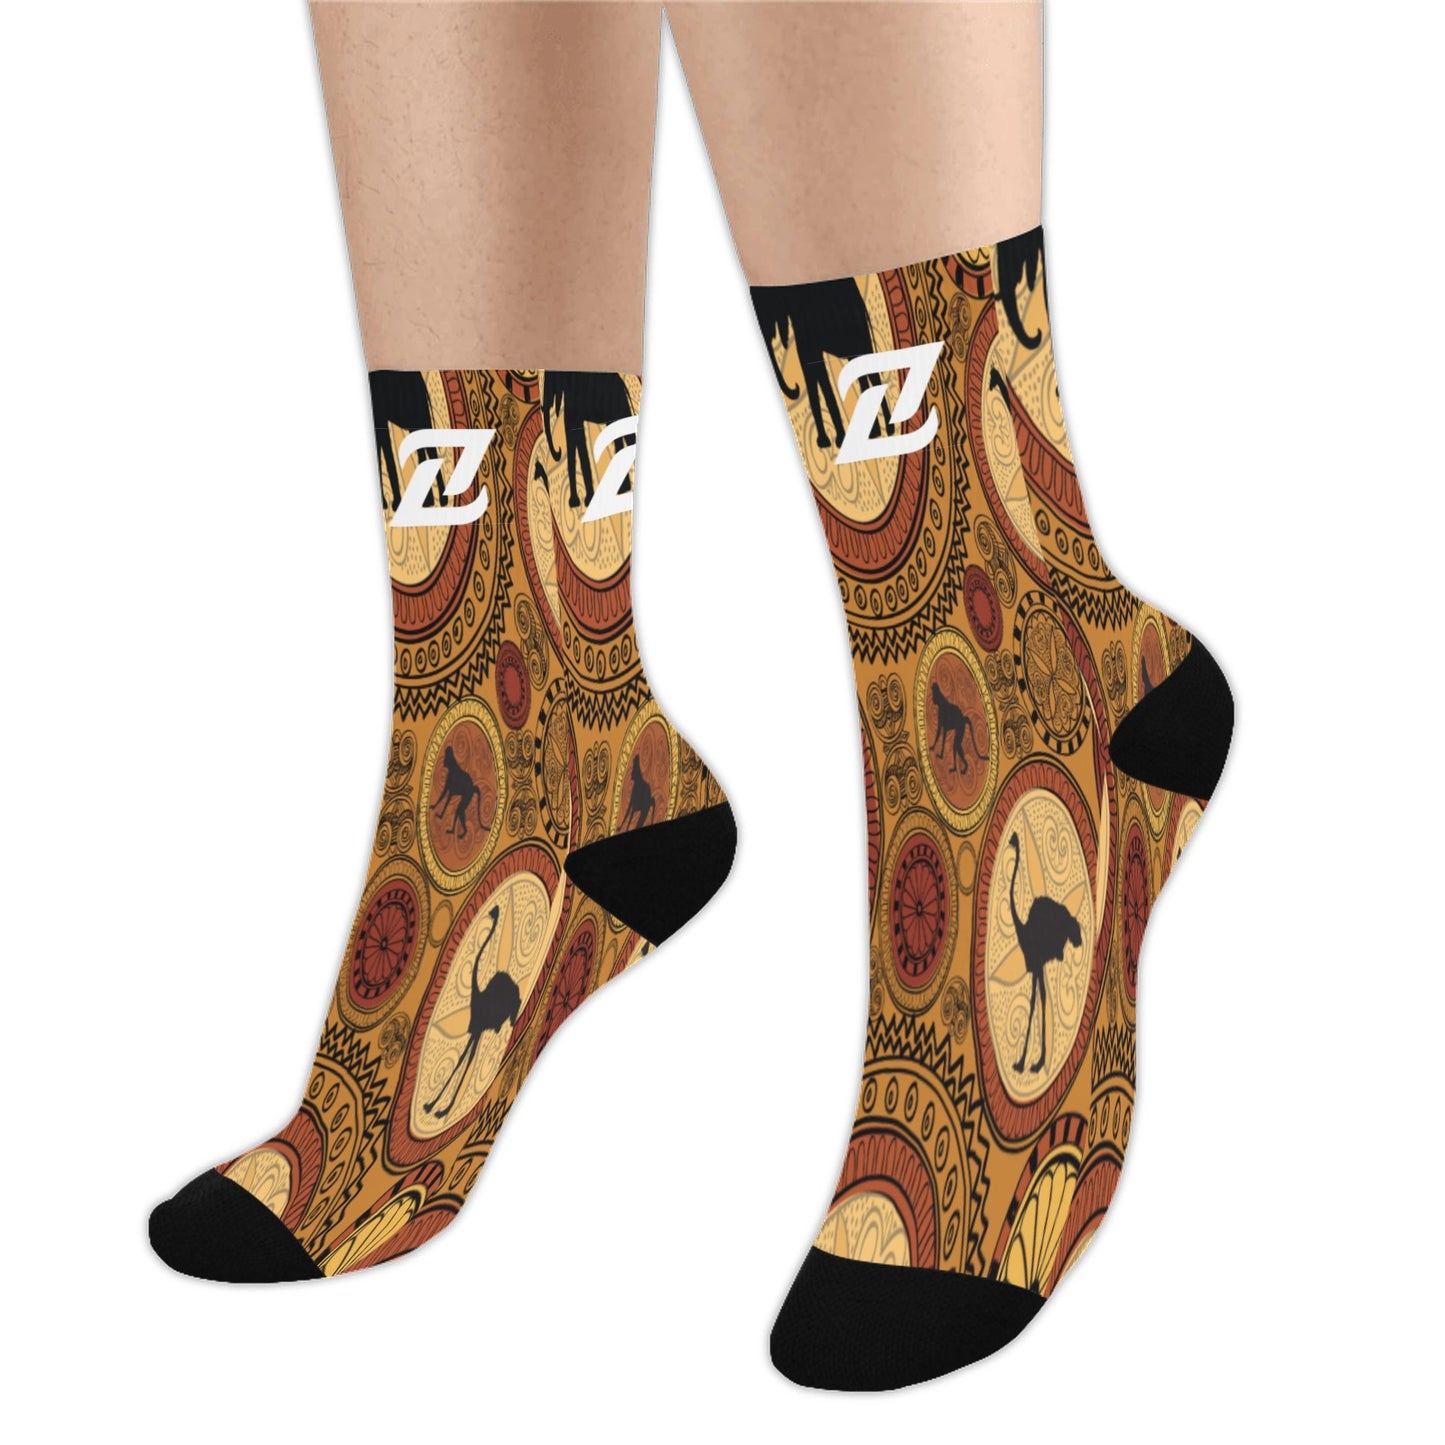 Zen Socks - Amazon